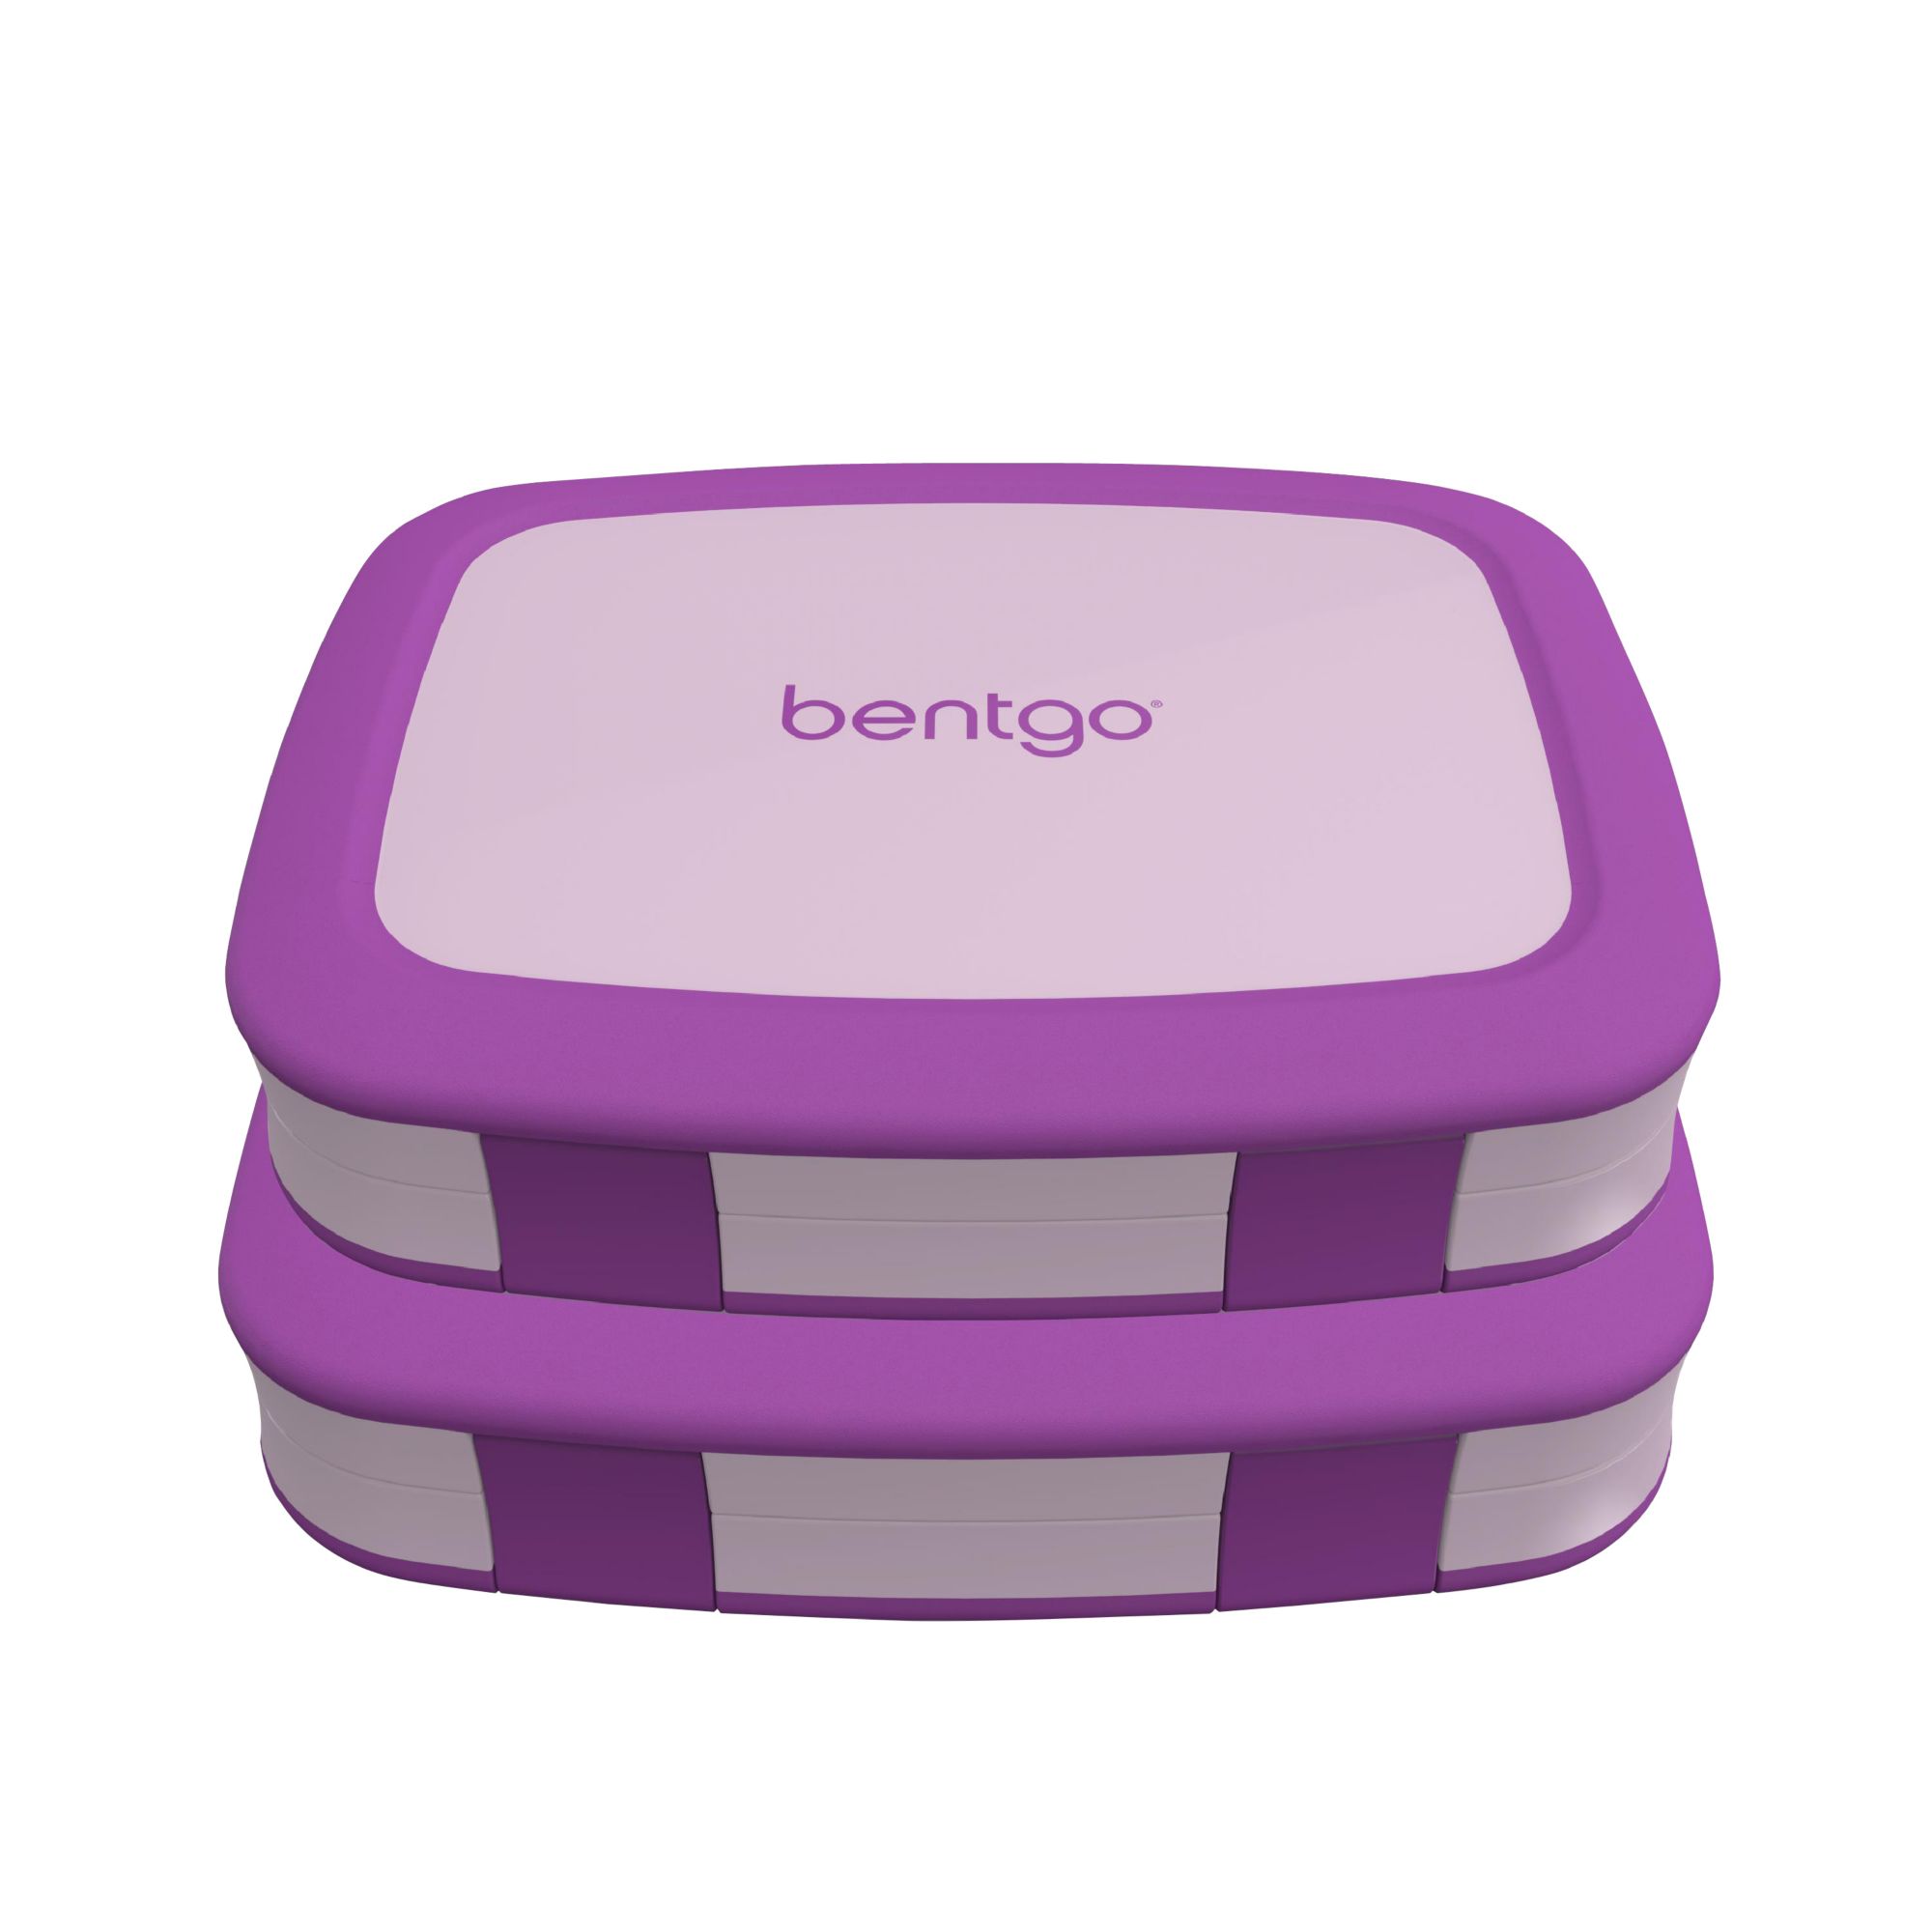 Bentgo Kids Bento Lunch Box 2-Pack - Unicorn